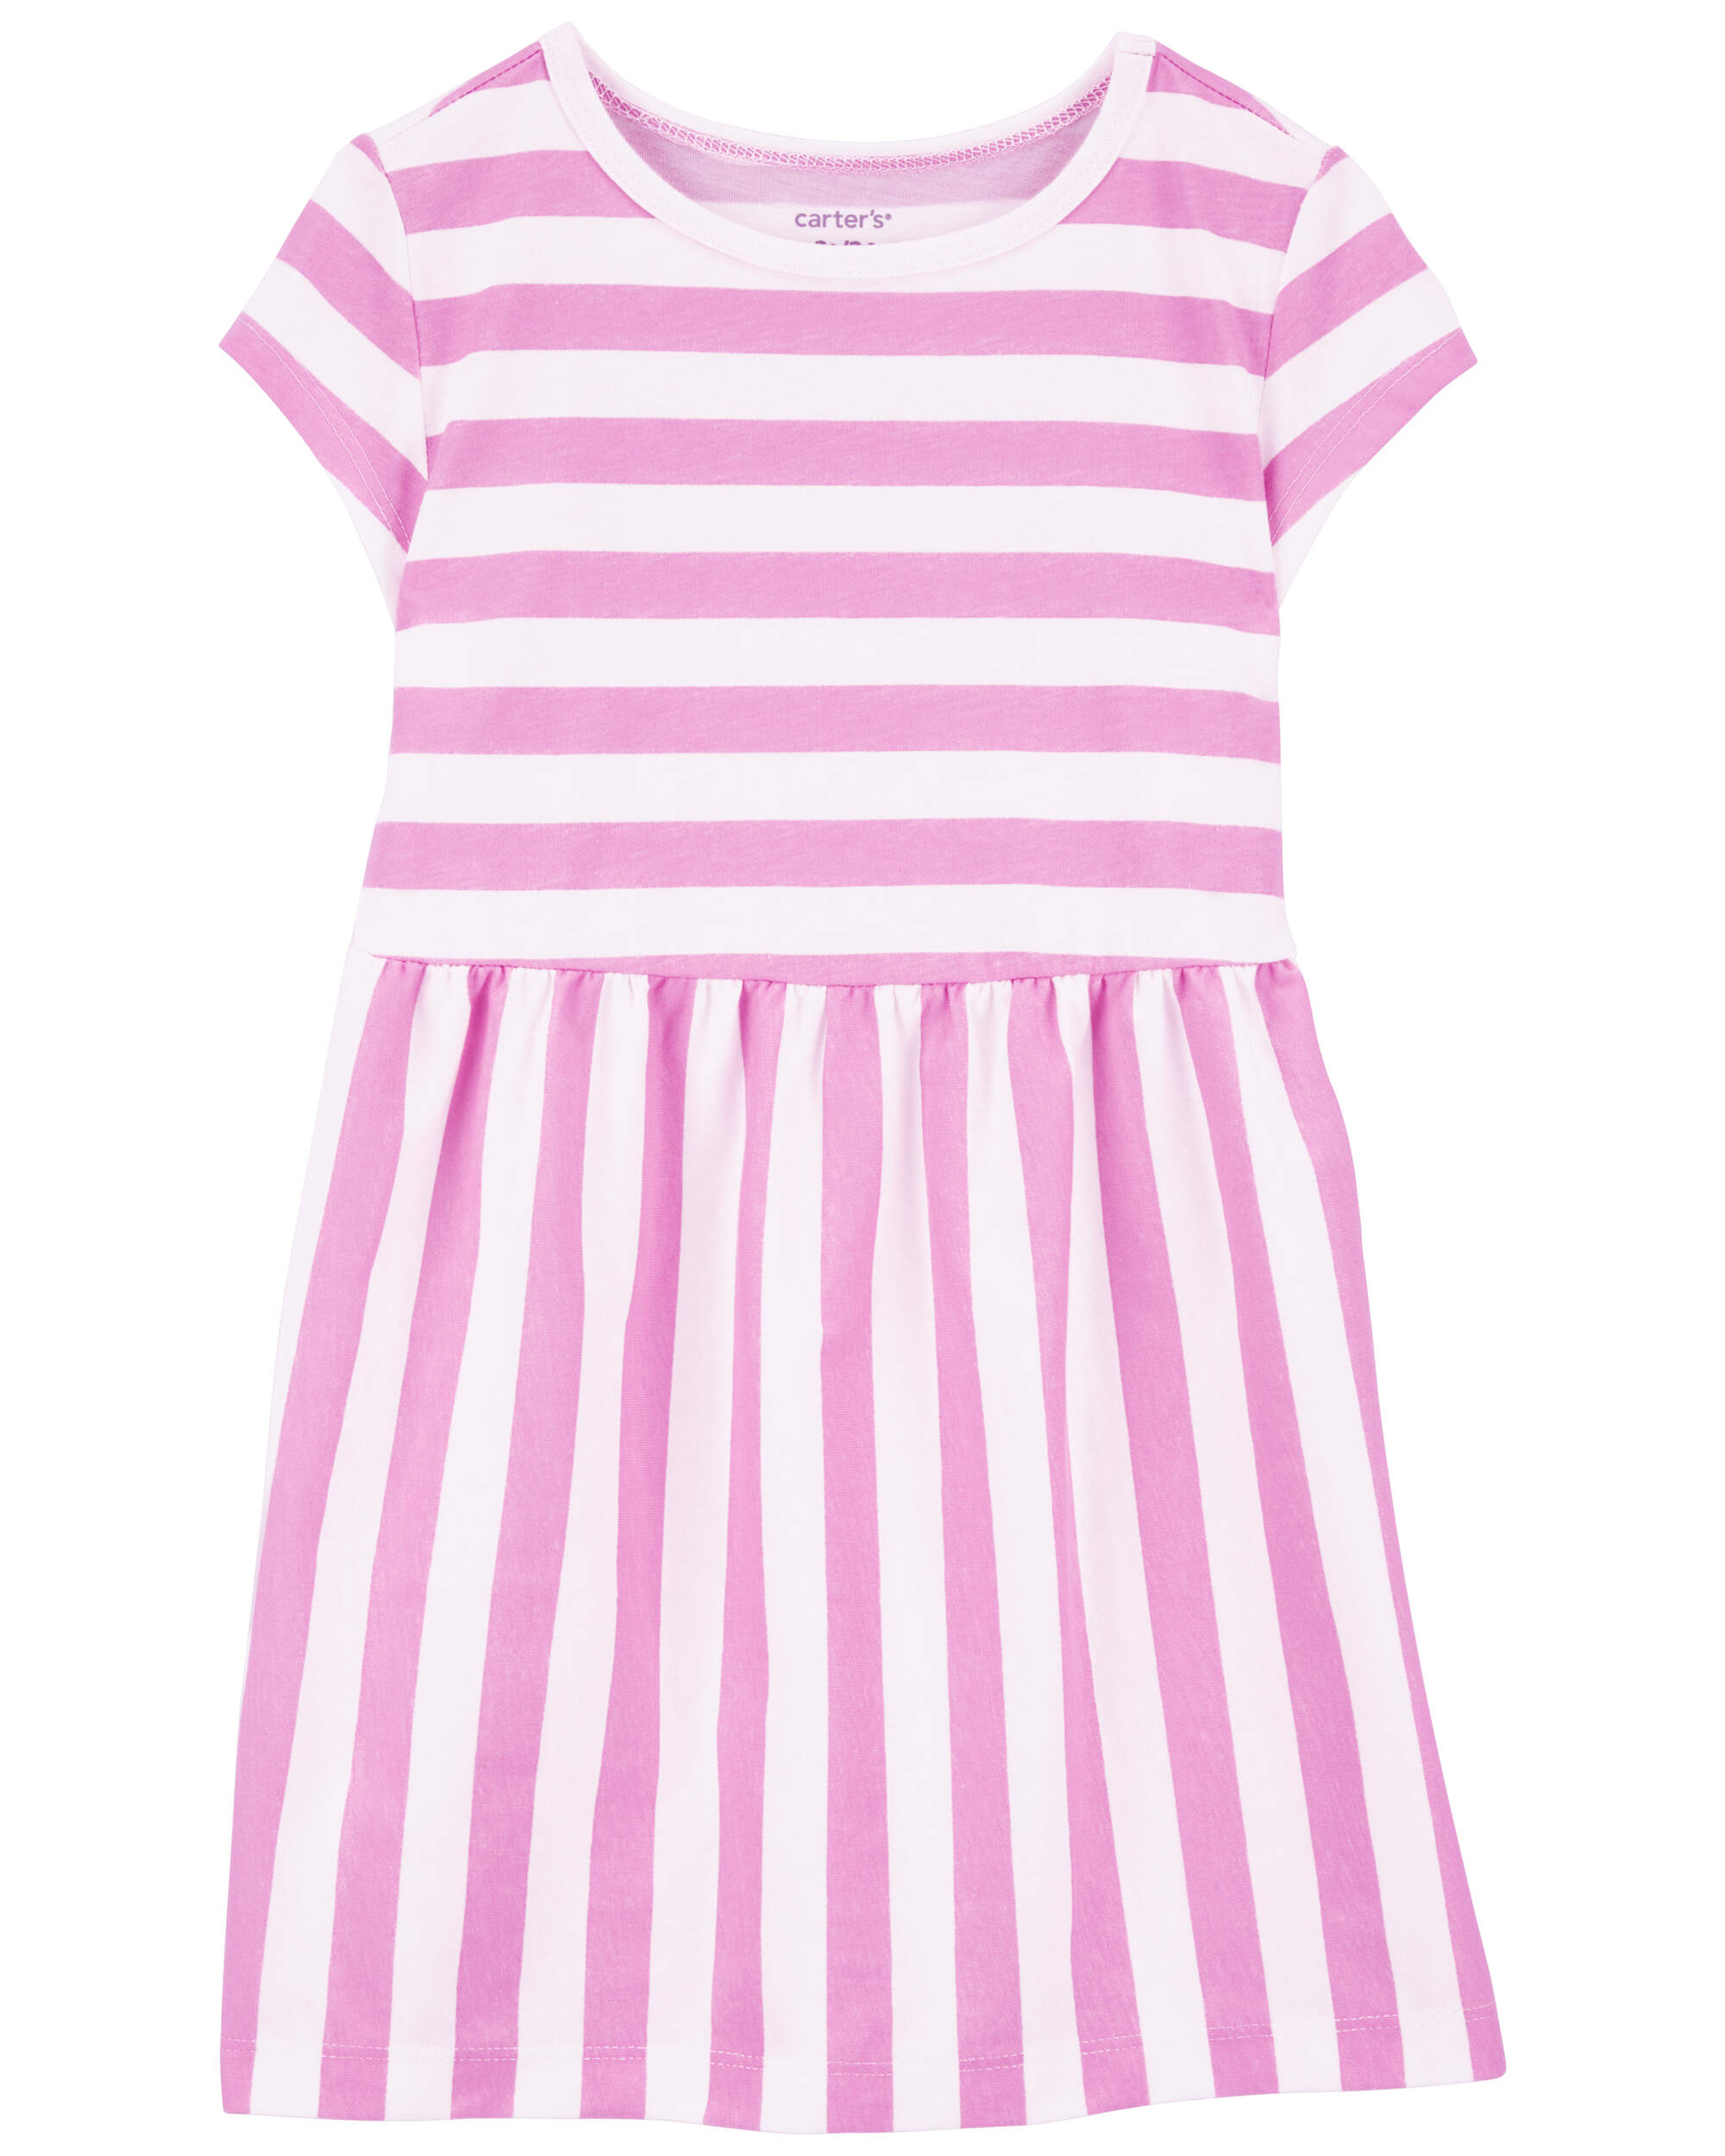 Toddler Striped Cotton Dress